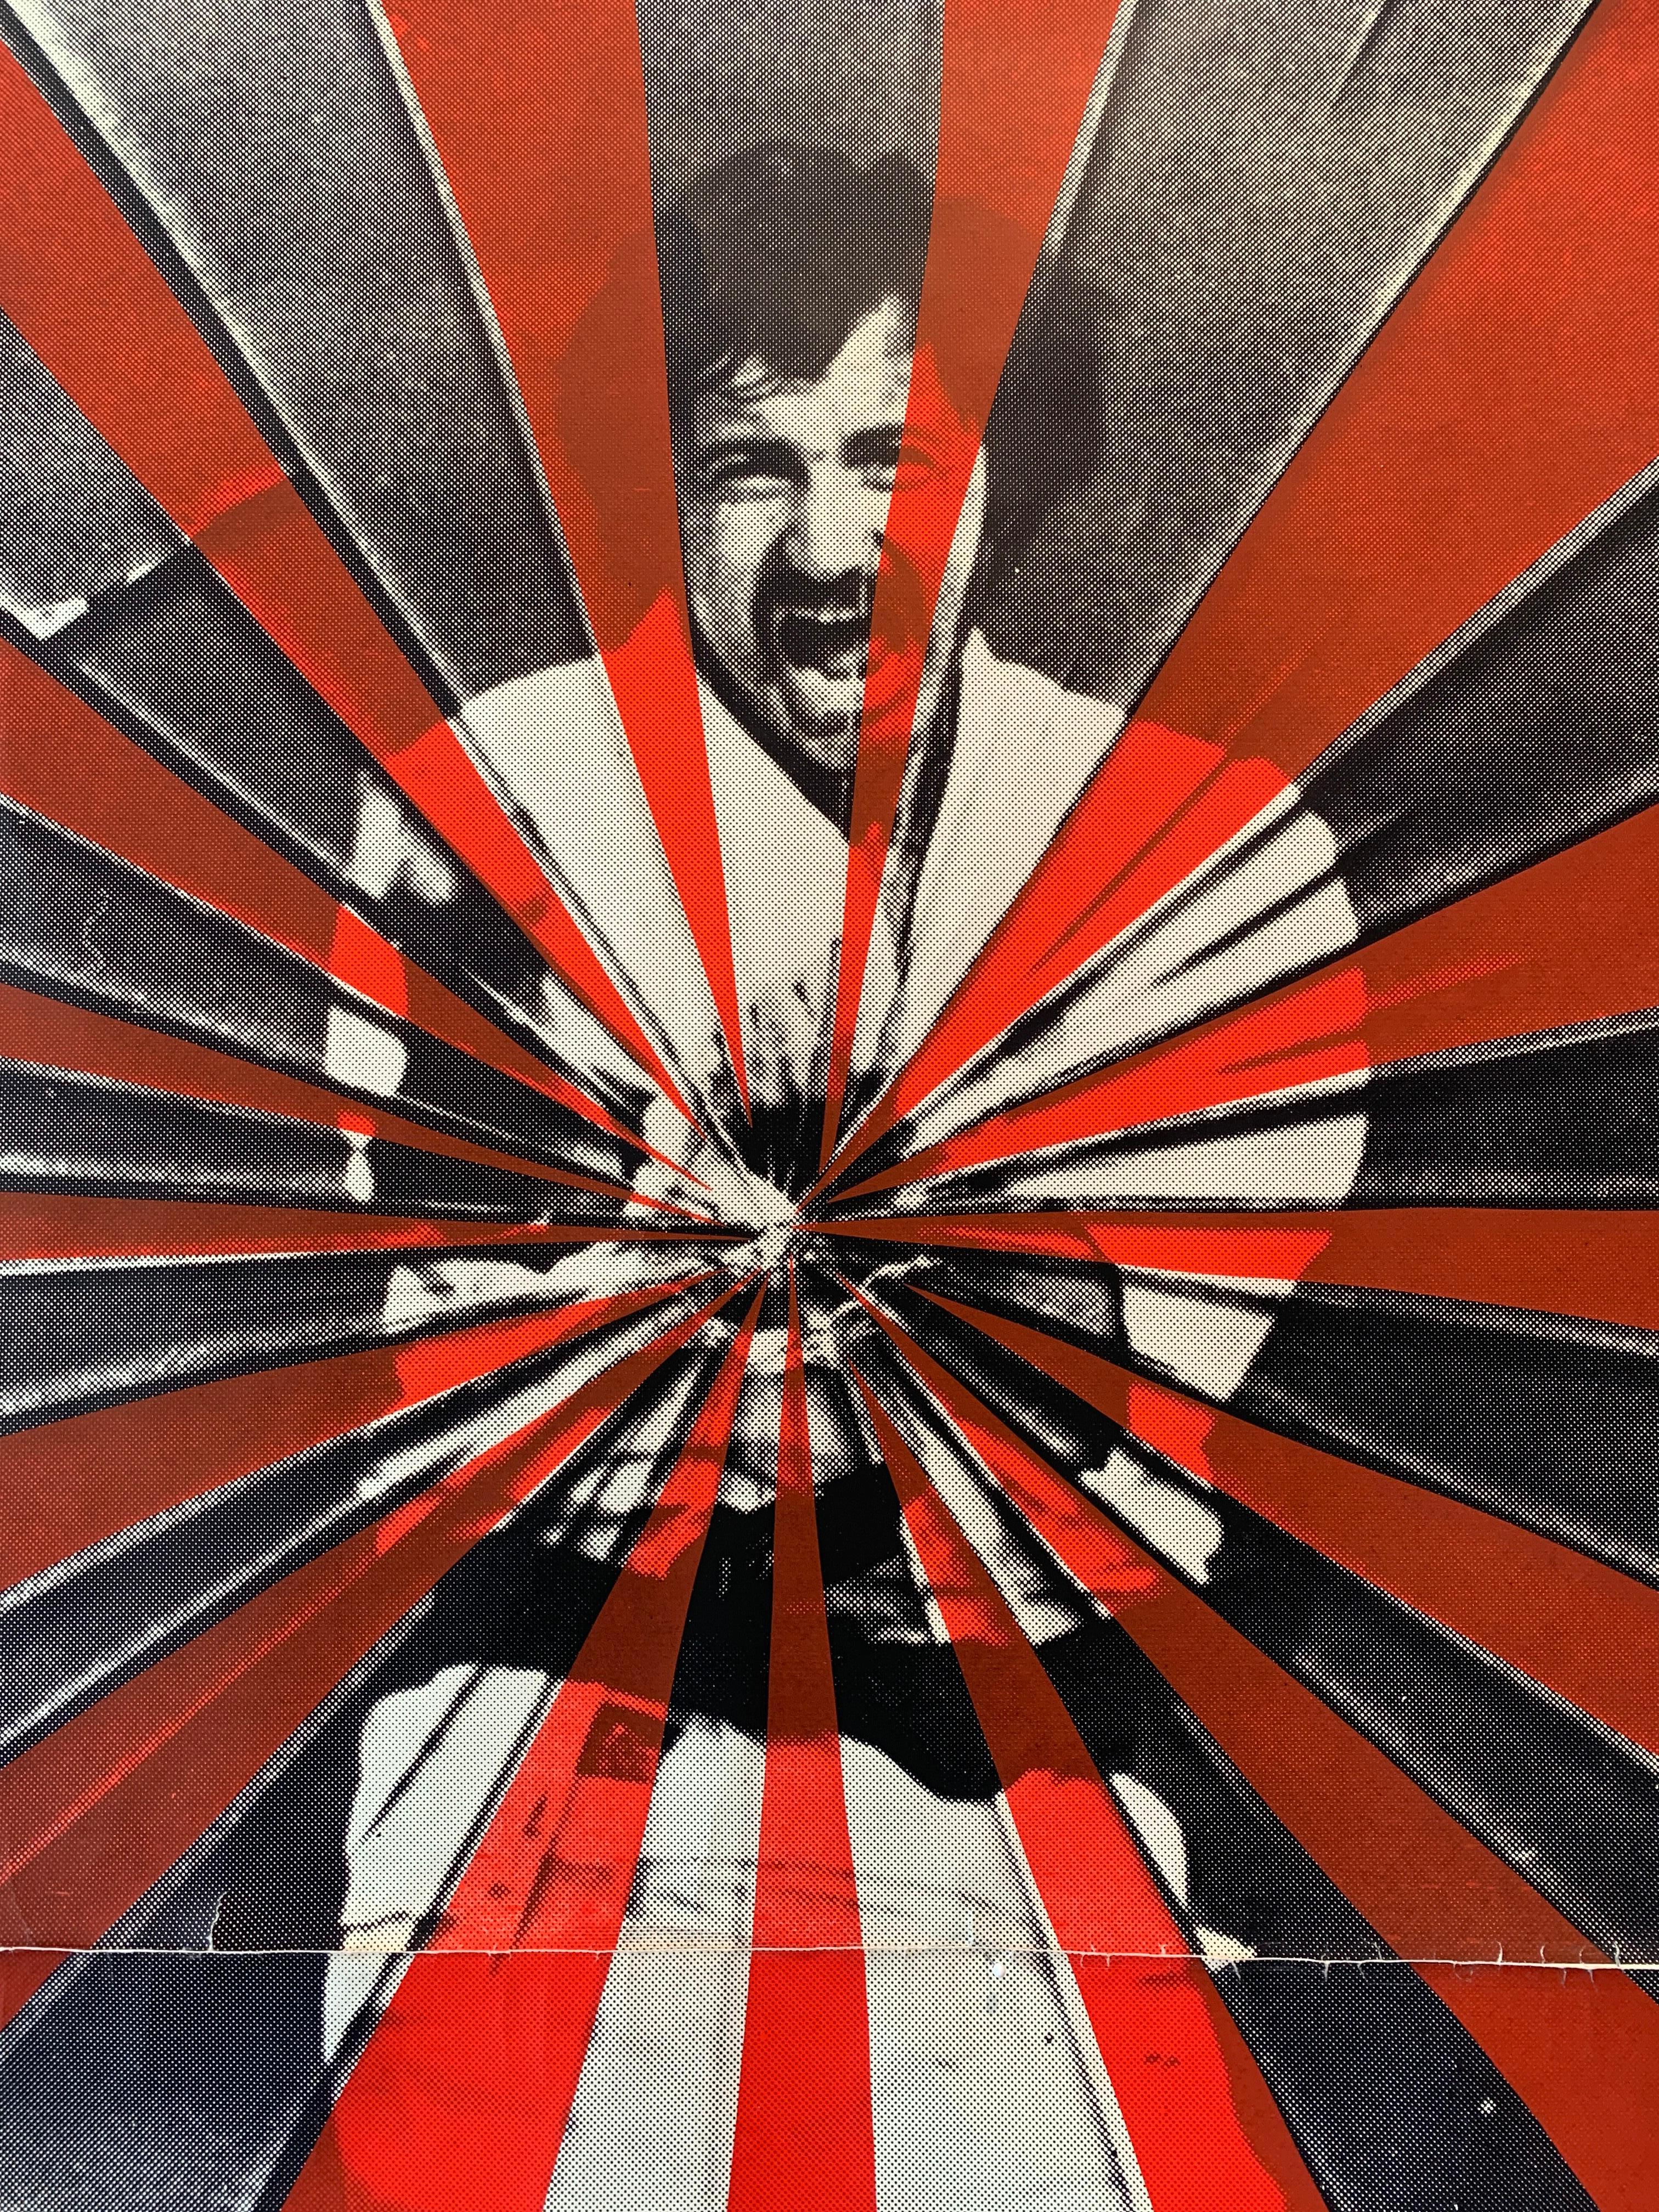 Boris Bucan 'Karate' Original Vintage Croatian Poster, Circa 1970 

